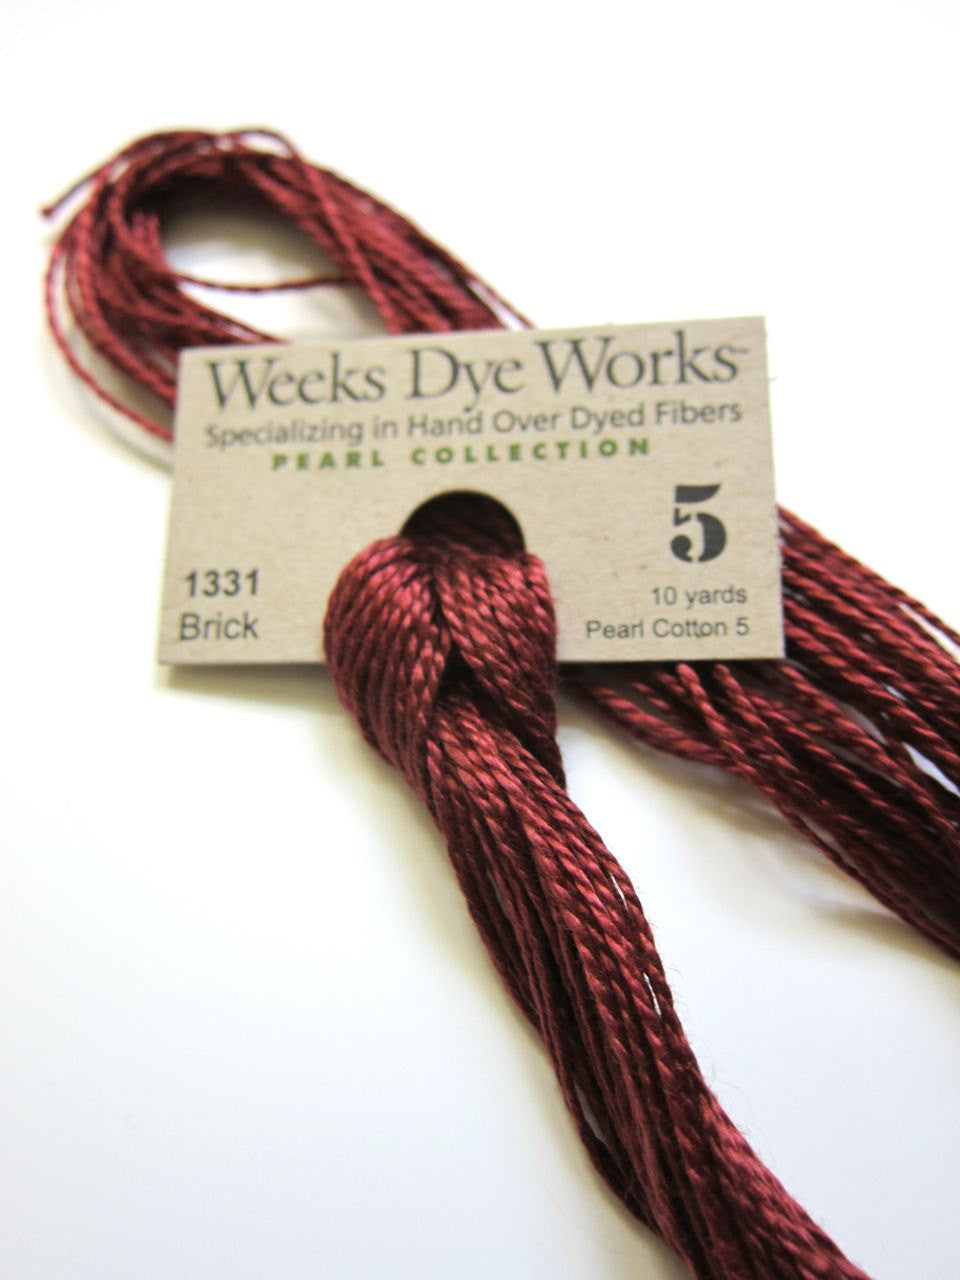 Weeks Dye Works Pearl Cotton - Brick (Size 5) Perle Cotton - Snuggly Monkey